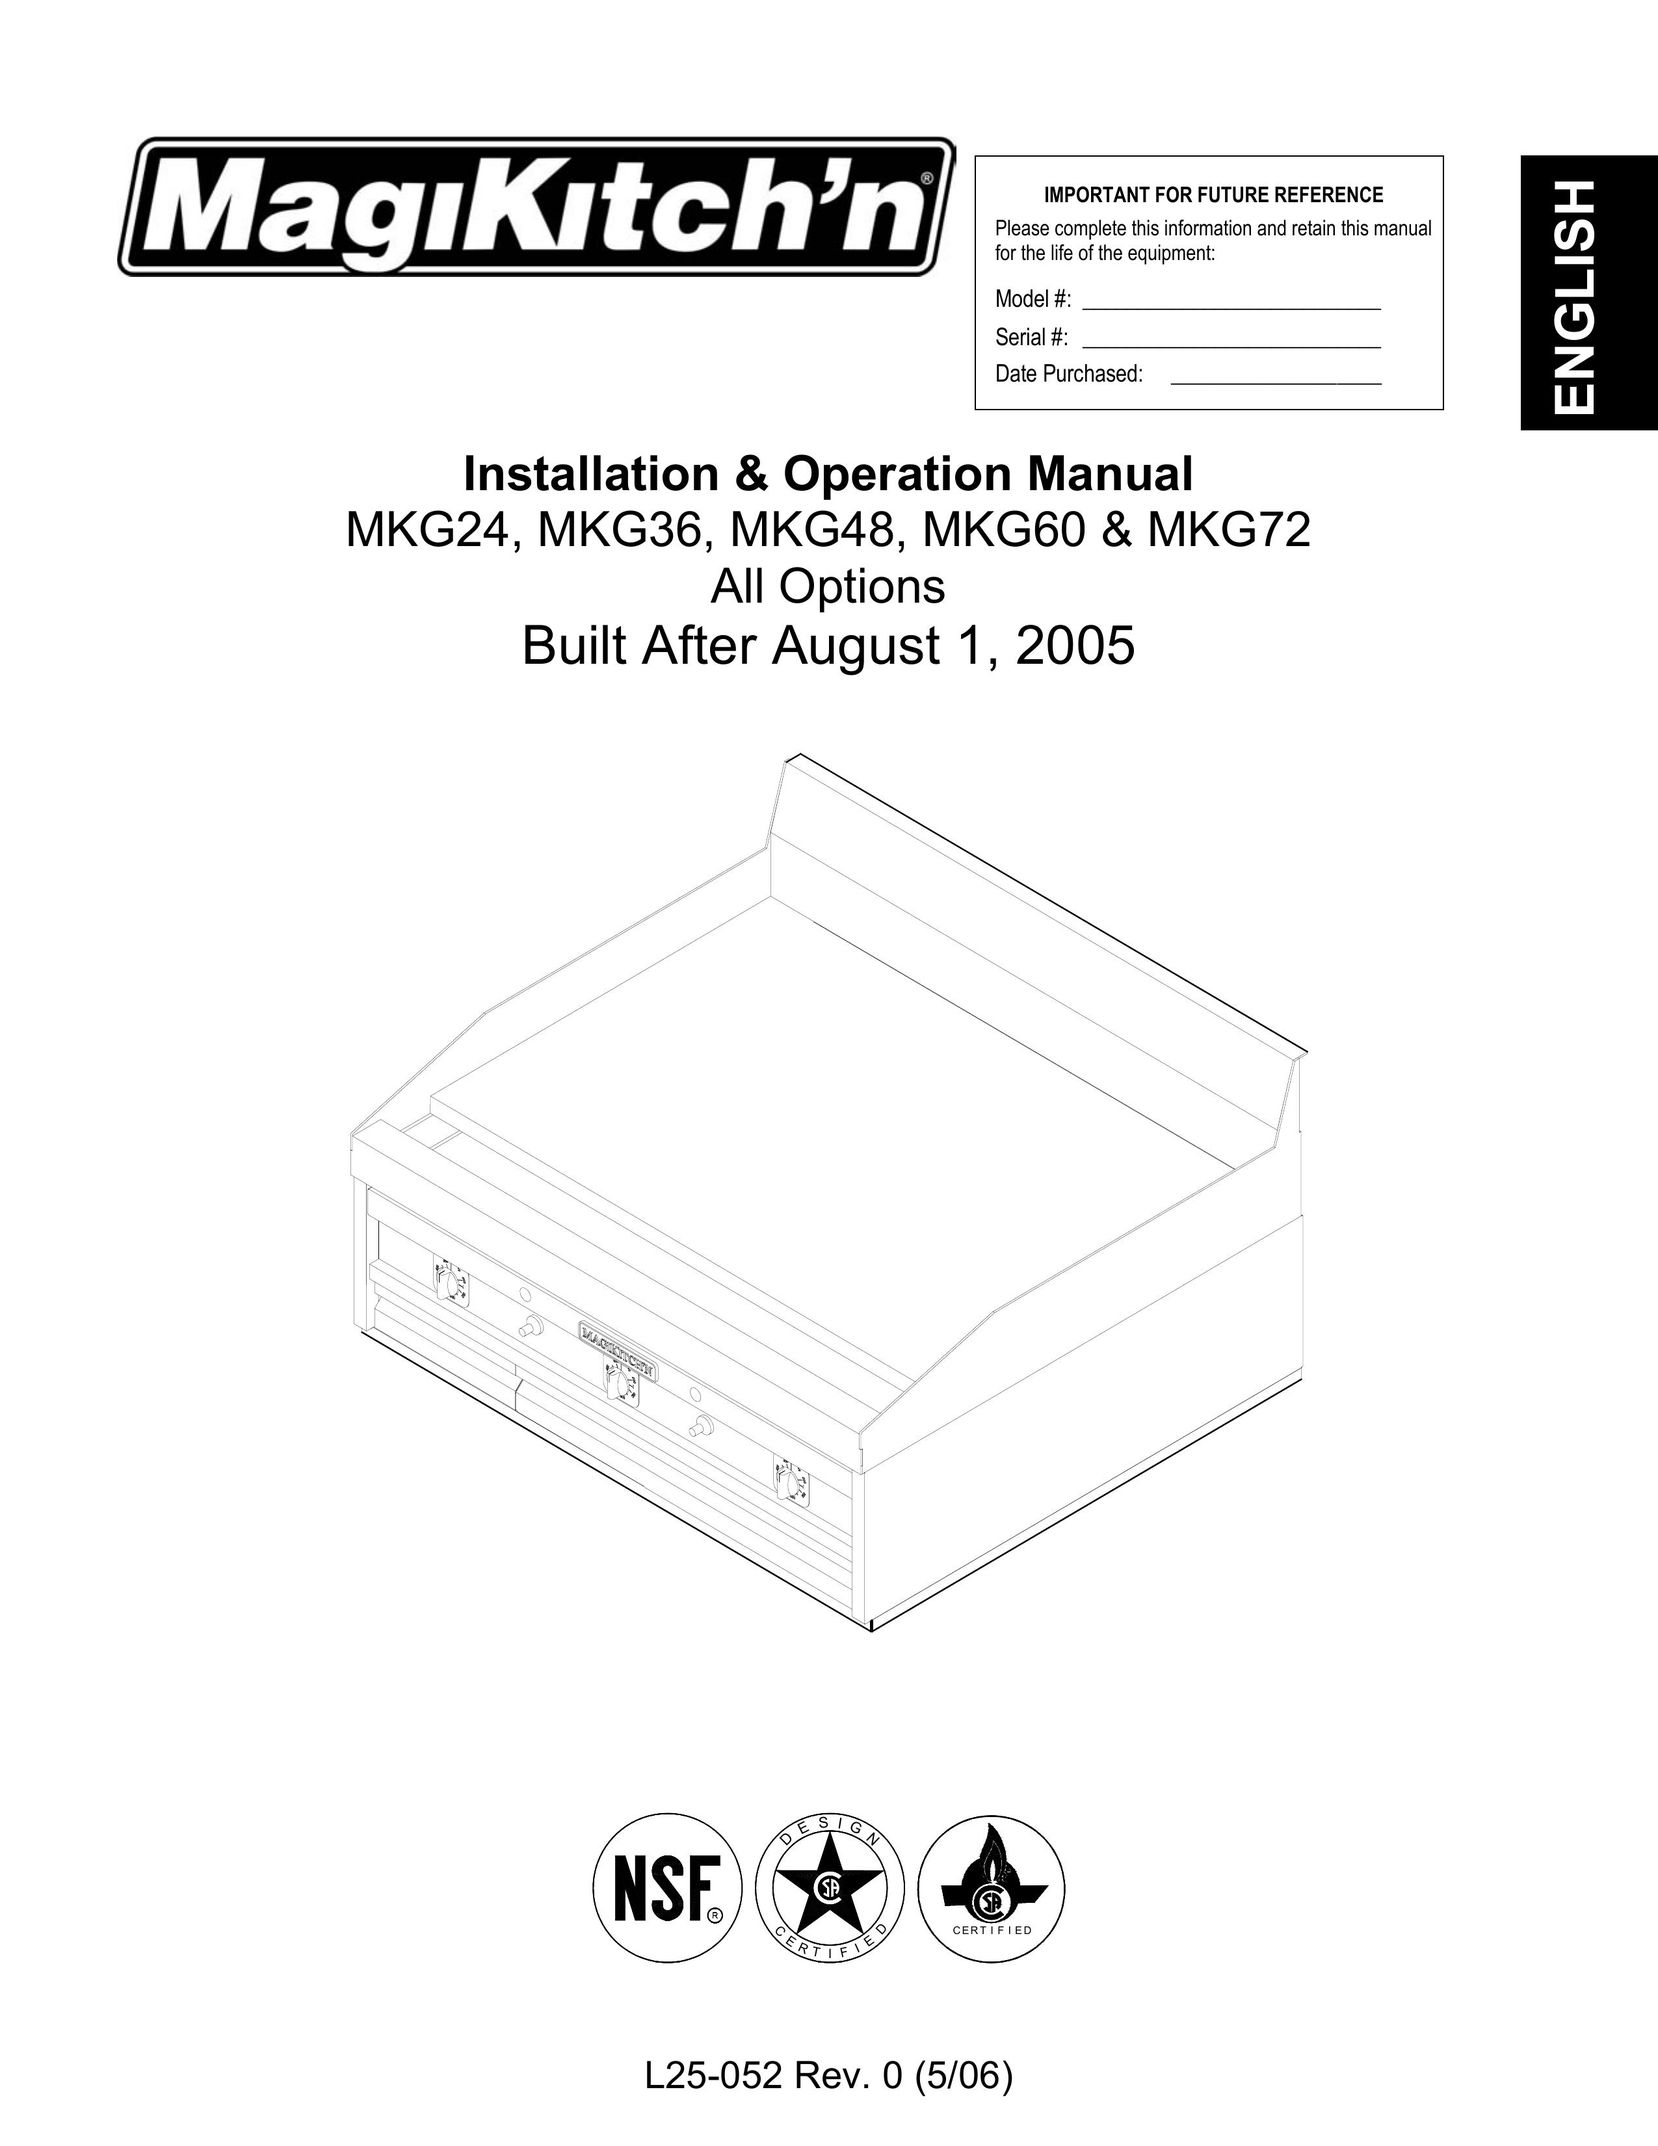 Magikitch'n MKG36 Griddle User Manual